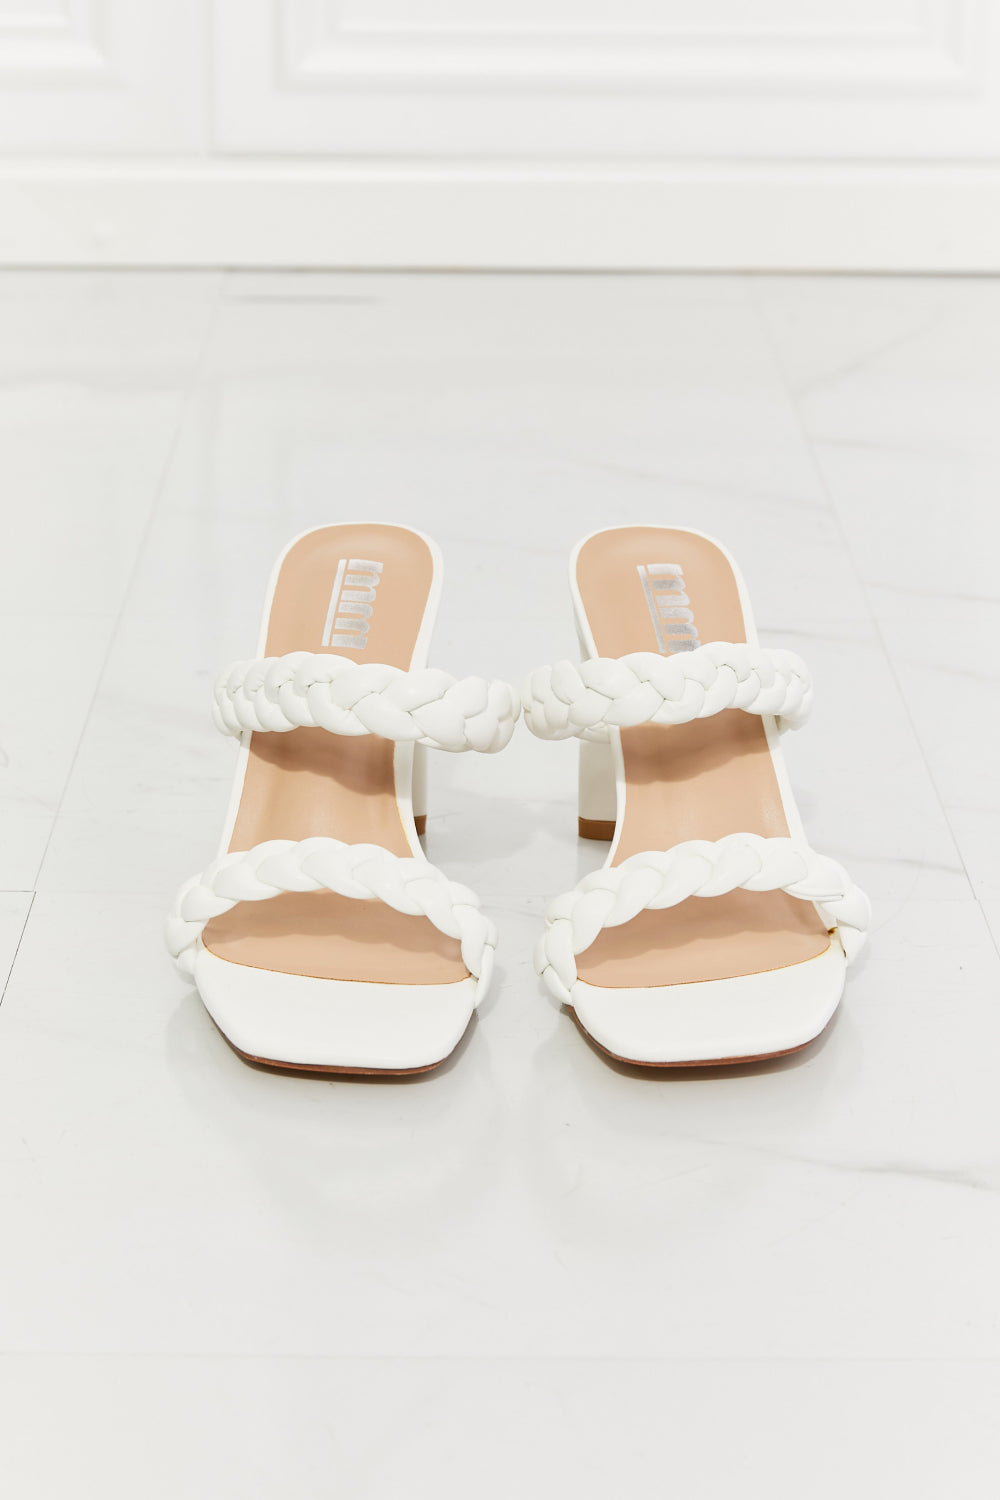 In Love Double Braided White Block Heel Sandals